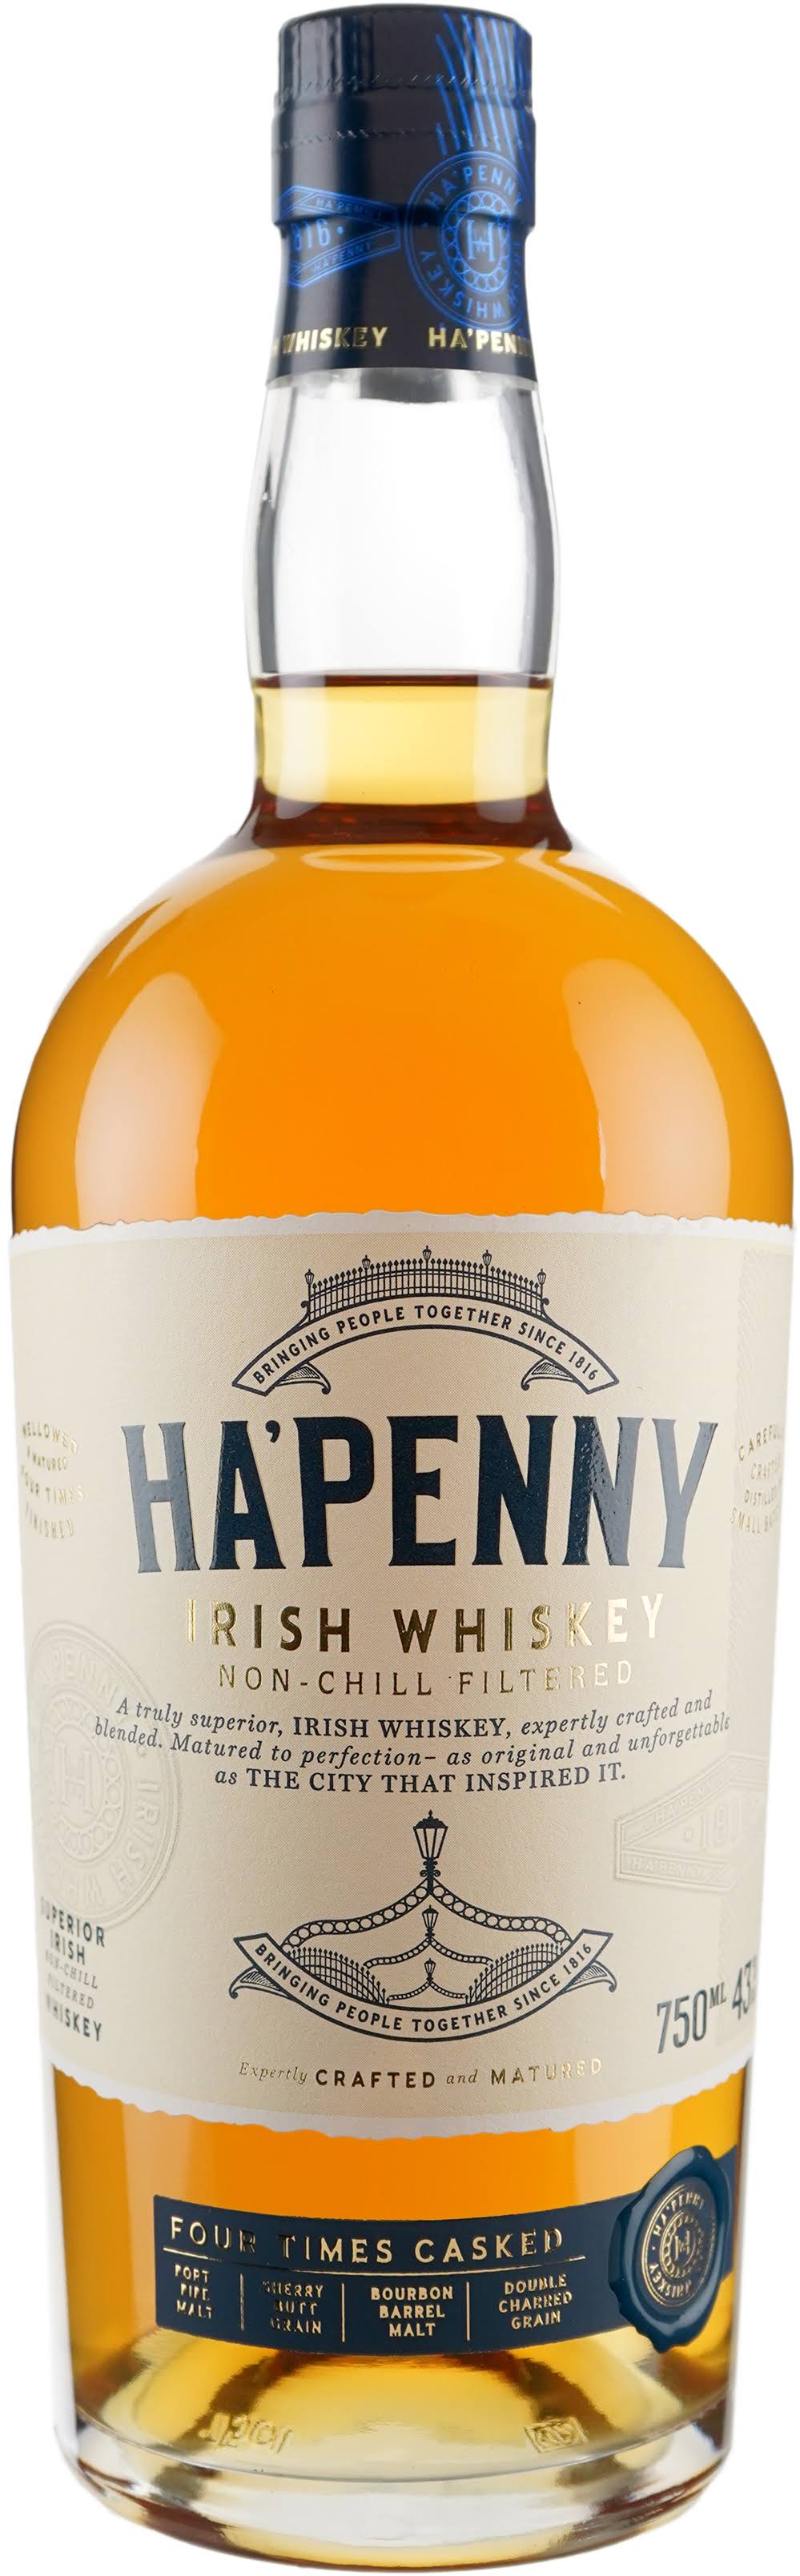 Ha'penny Irish Whiskey / 750ml